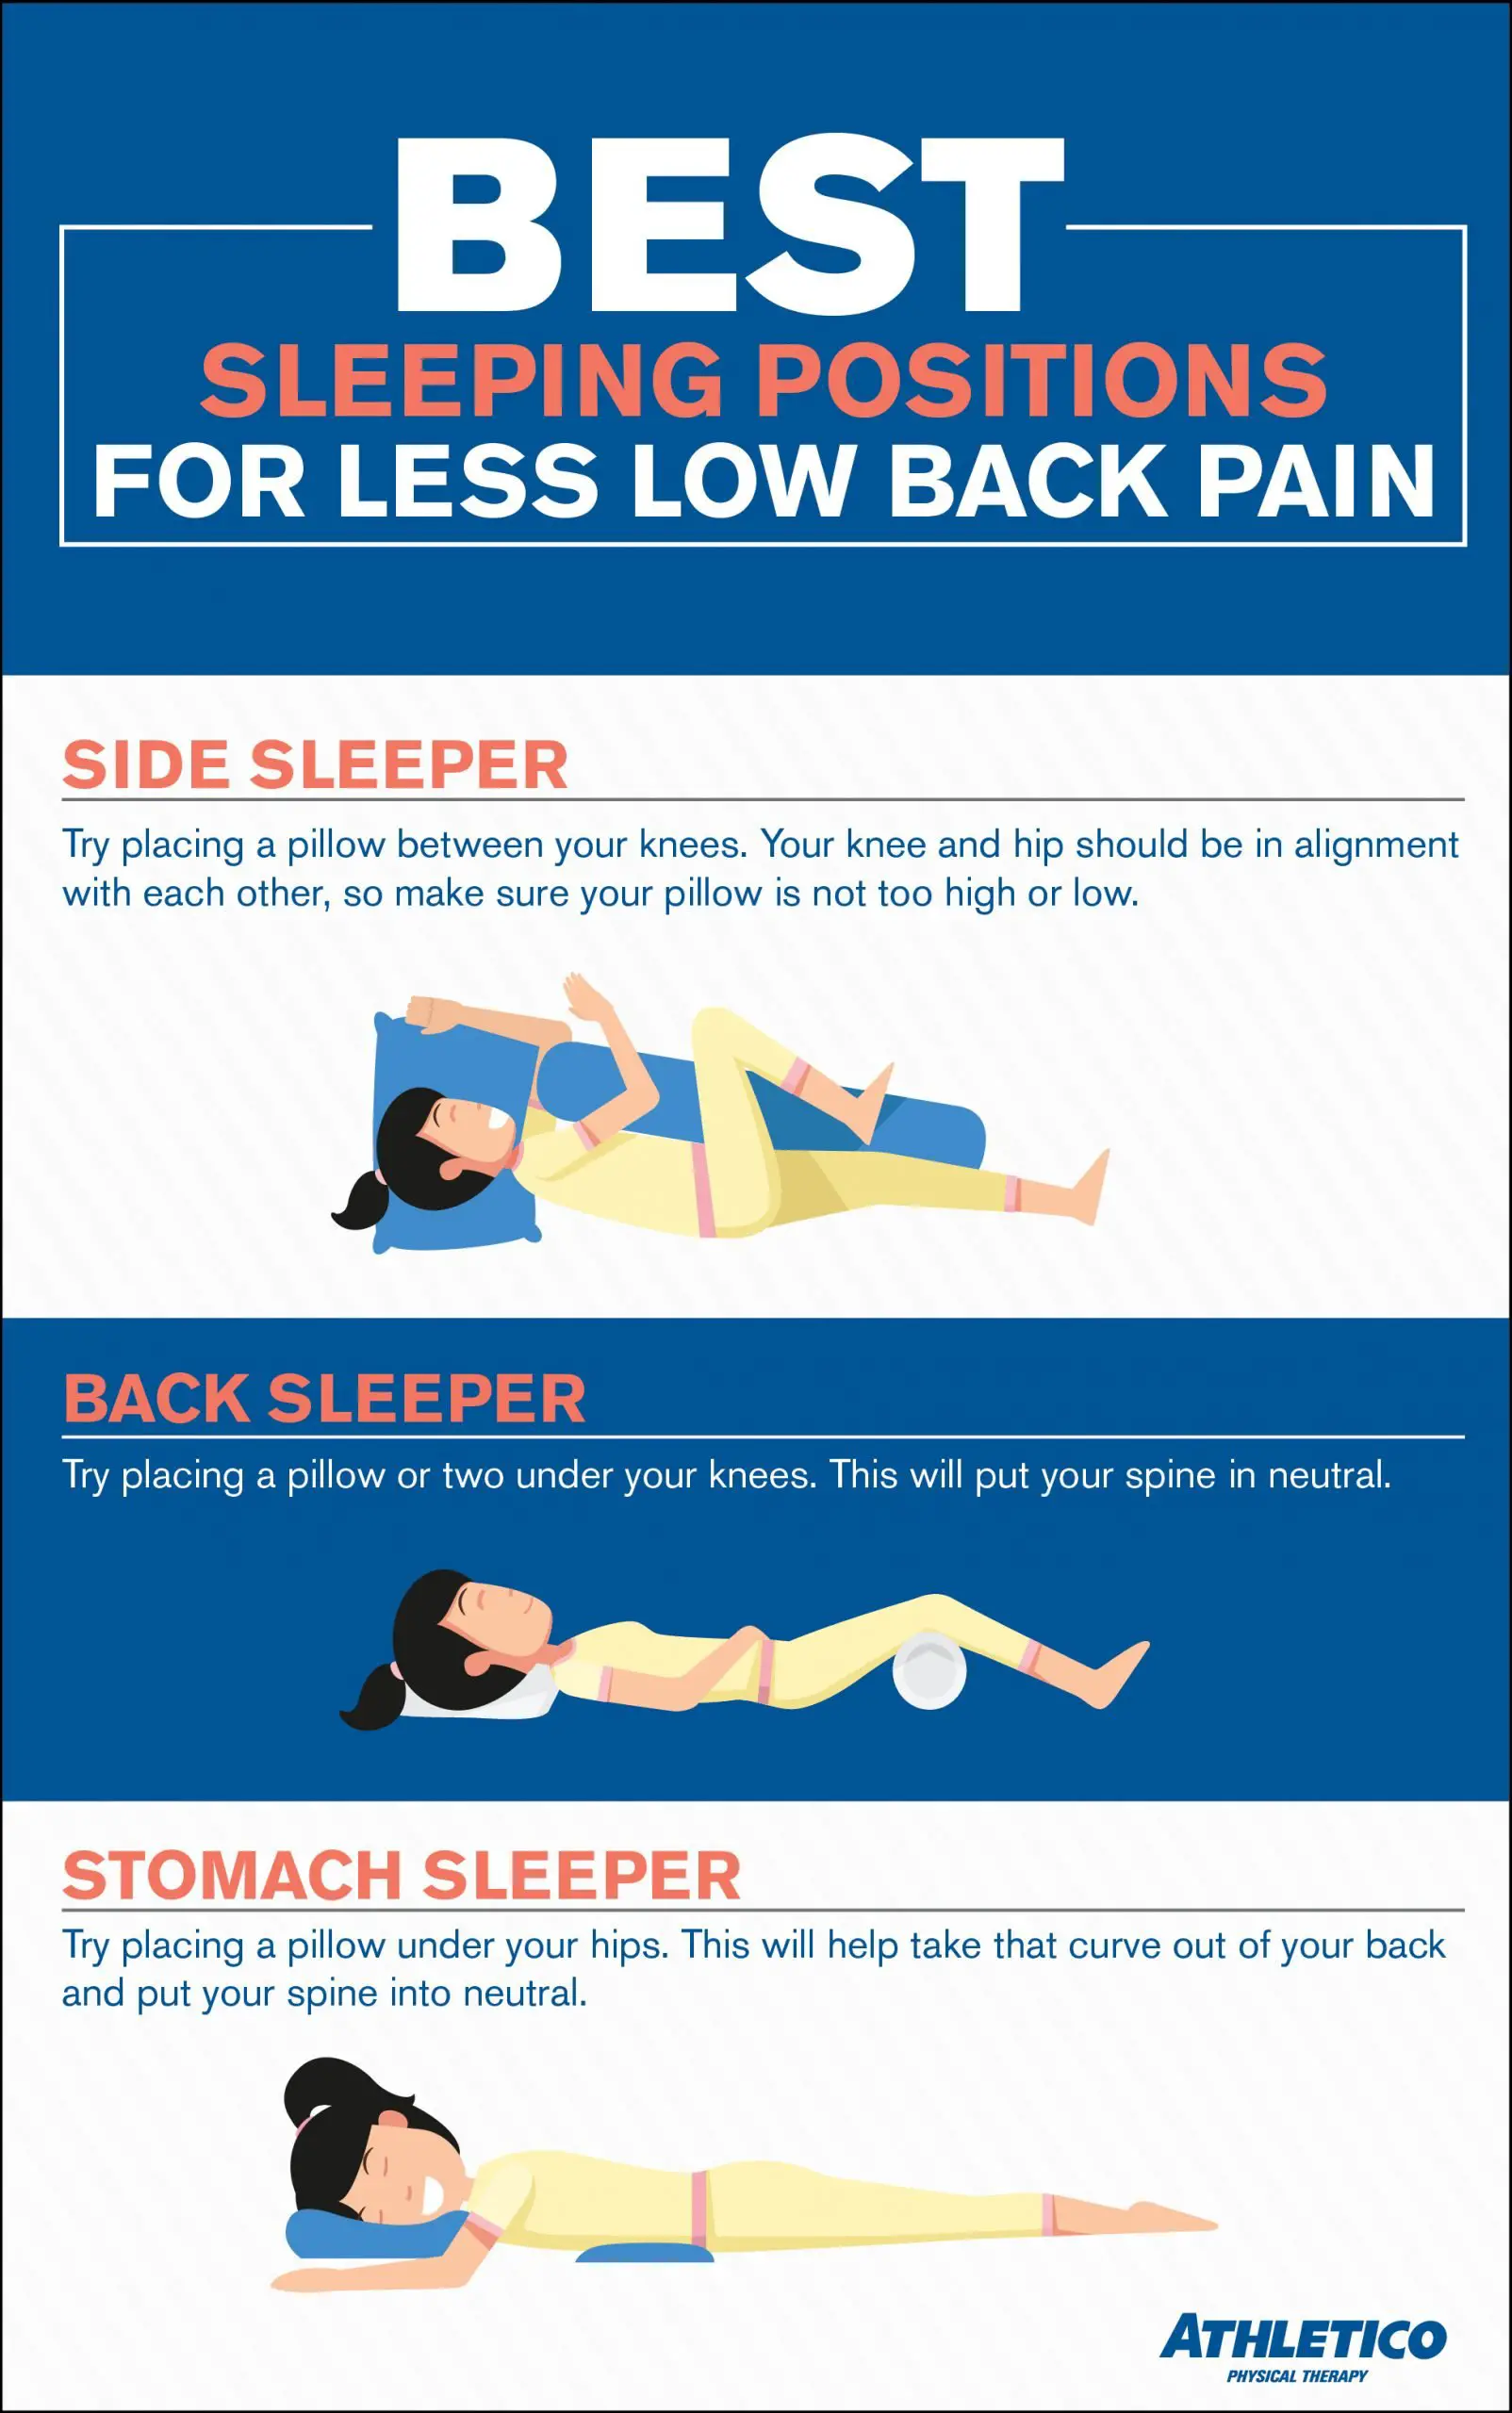 How should i sleep with lower back pain